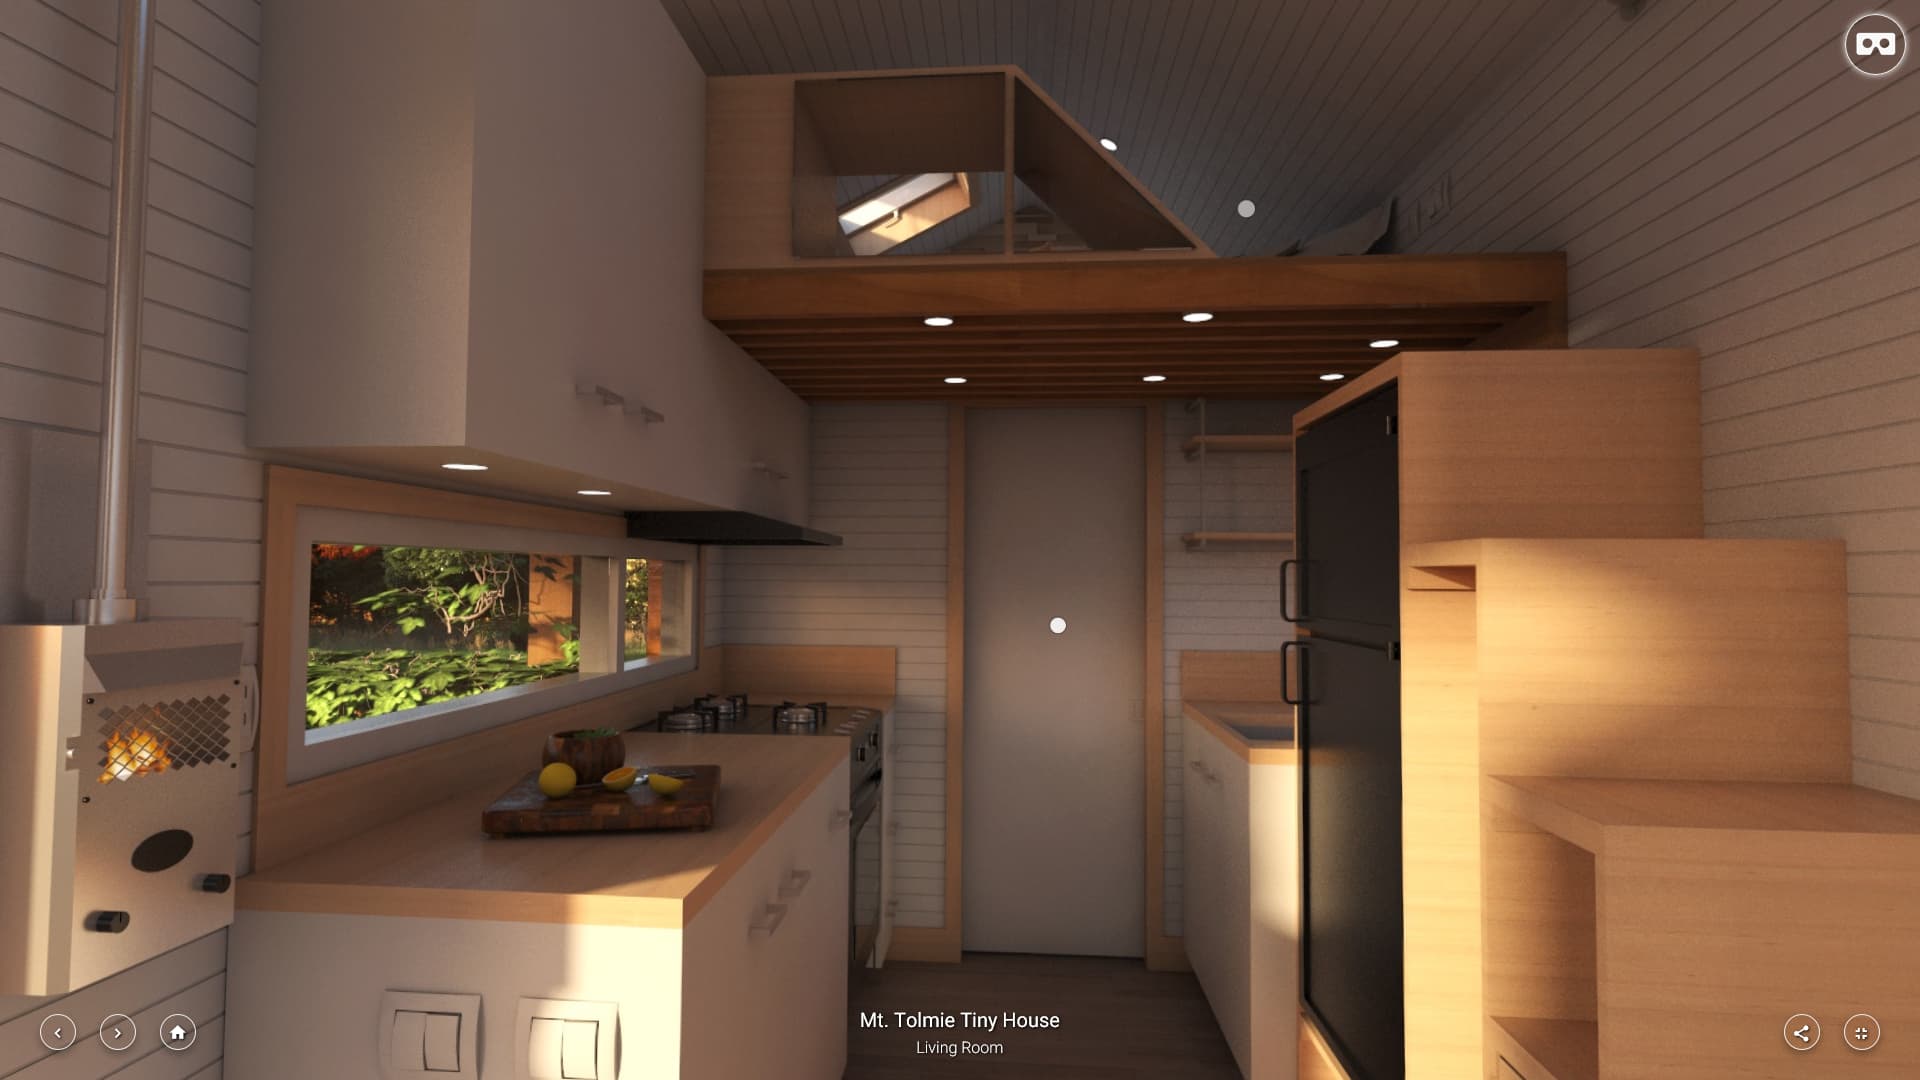 Designing for | Using VR in House Design